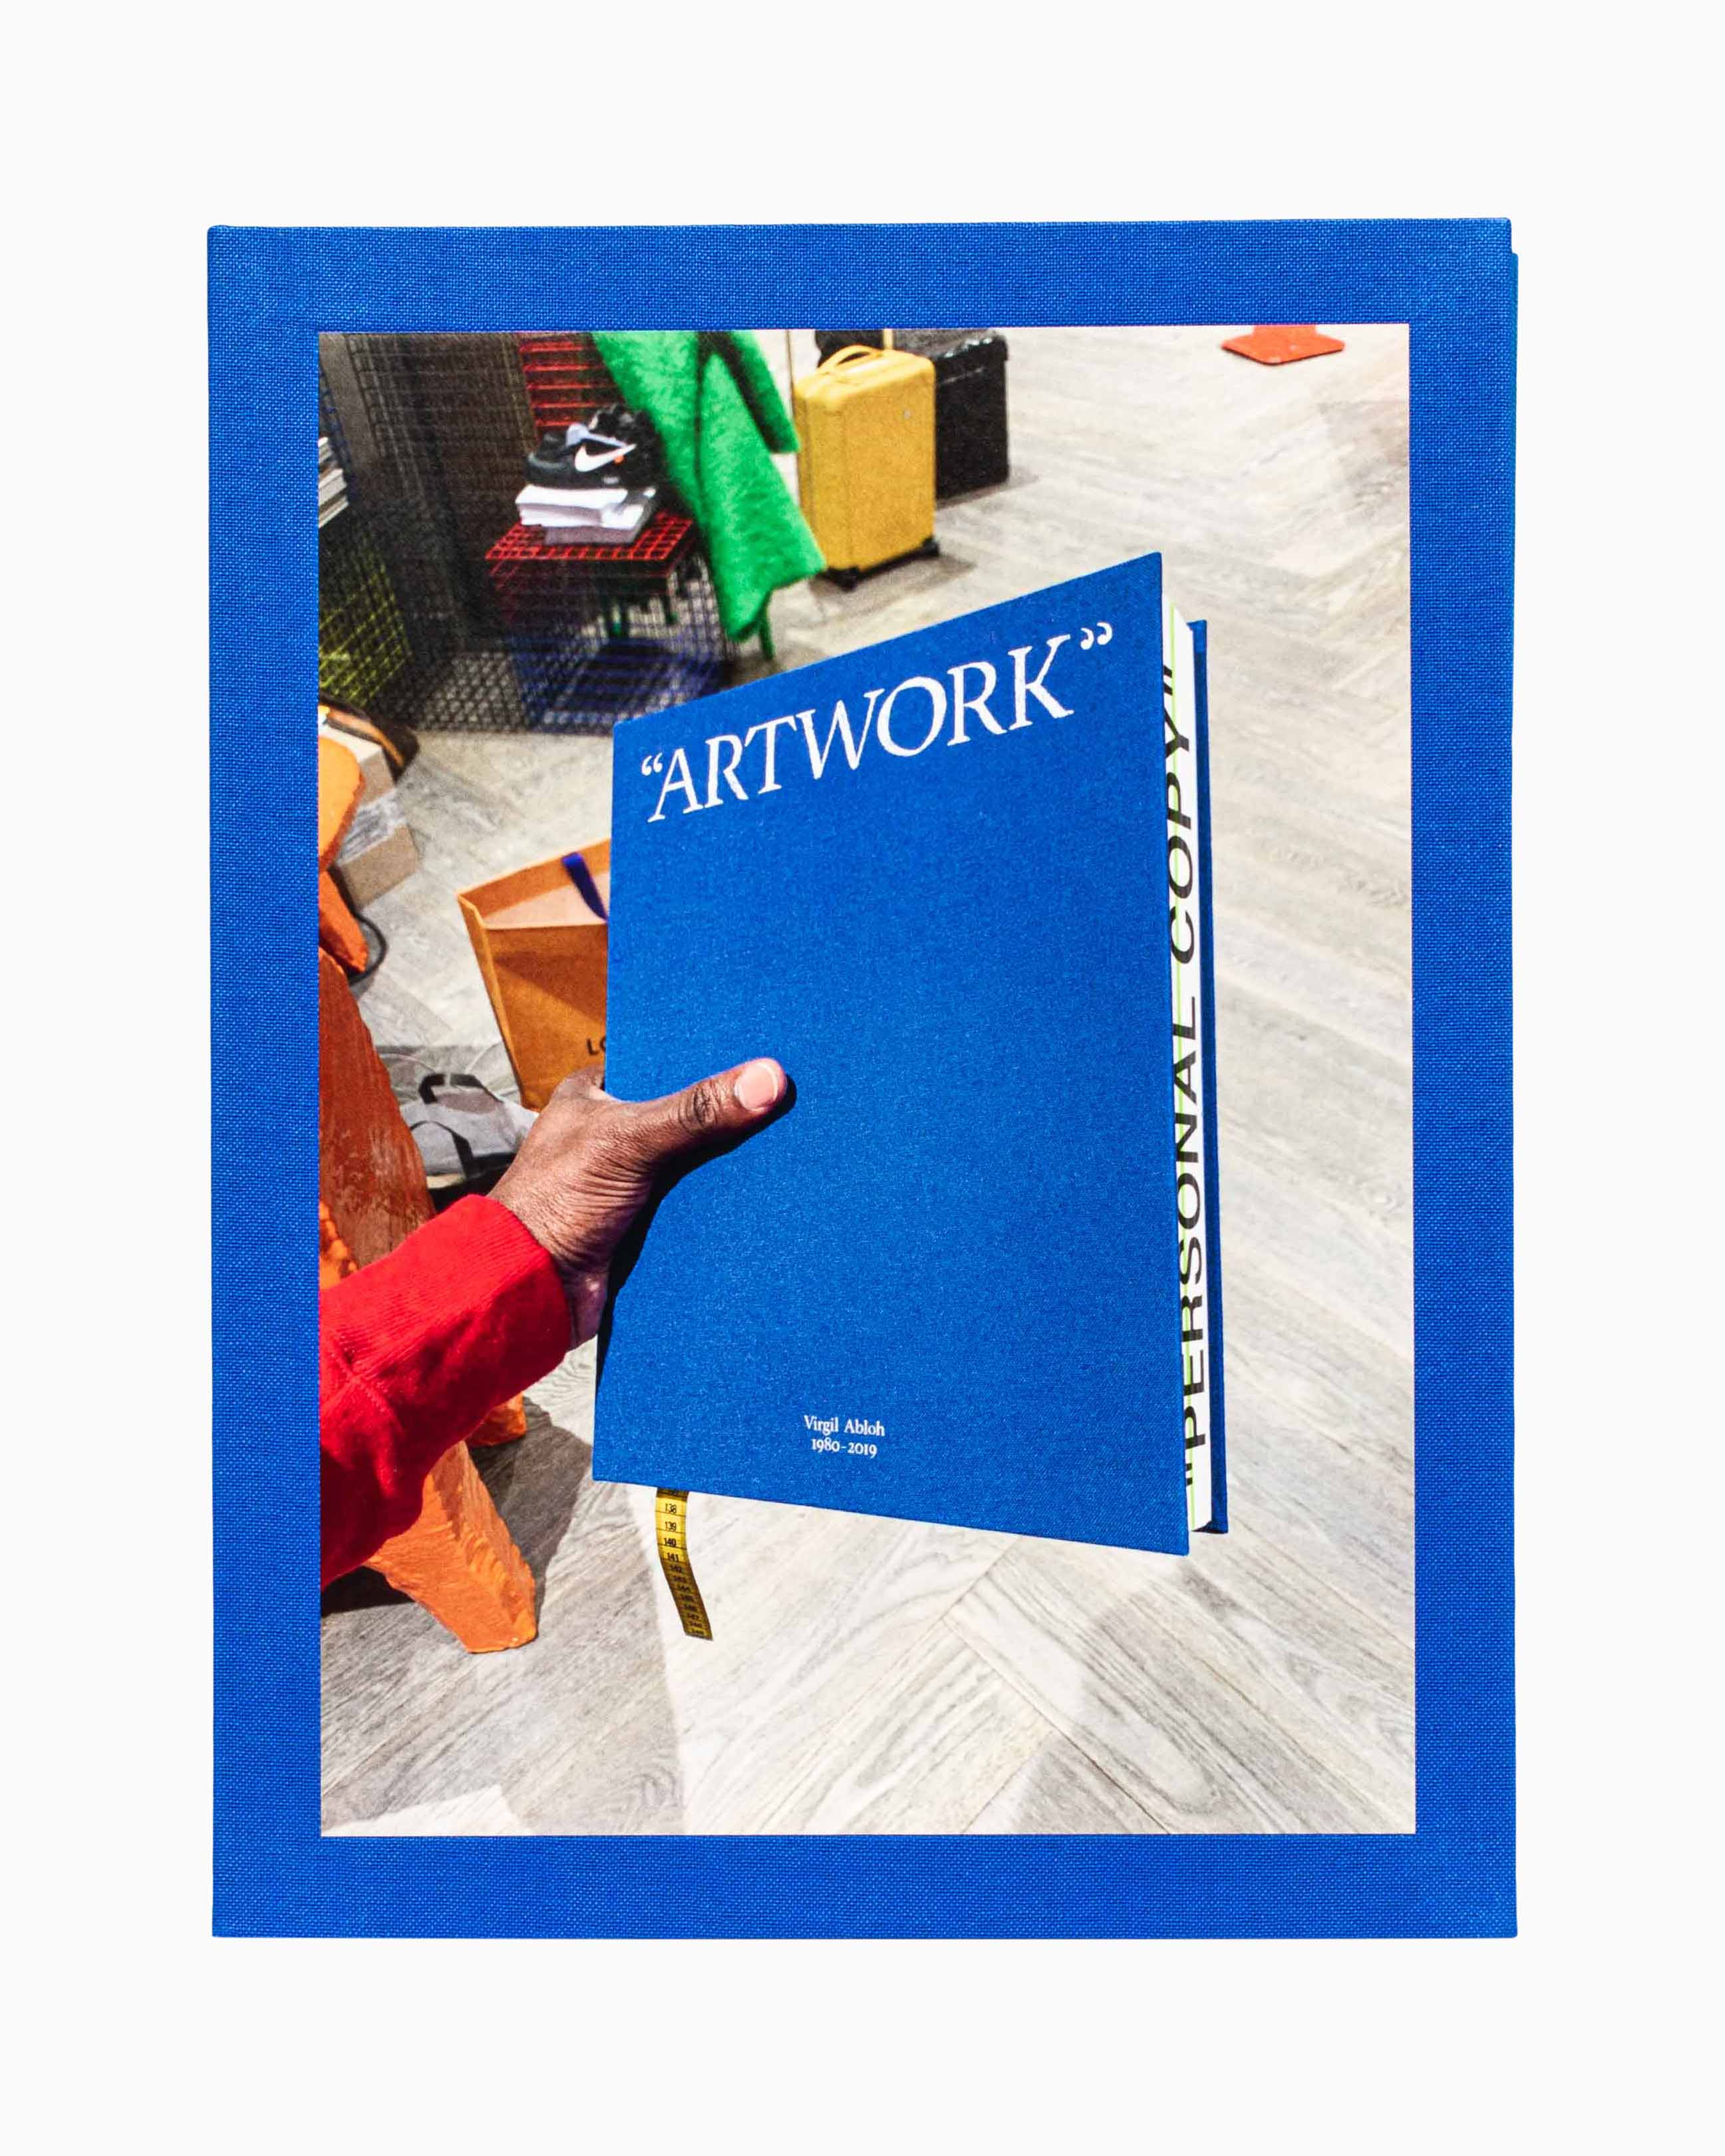 virgil abloh on X: “ARTWORK” museum catalog & book **special